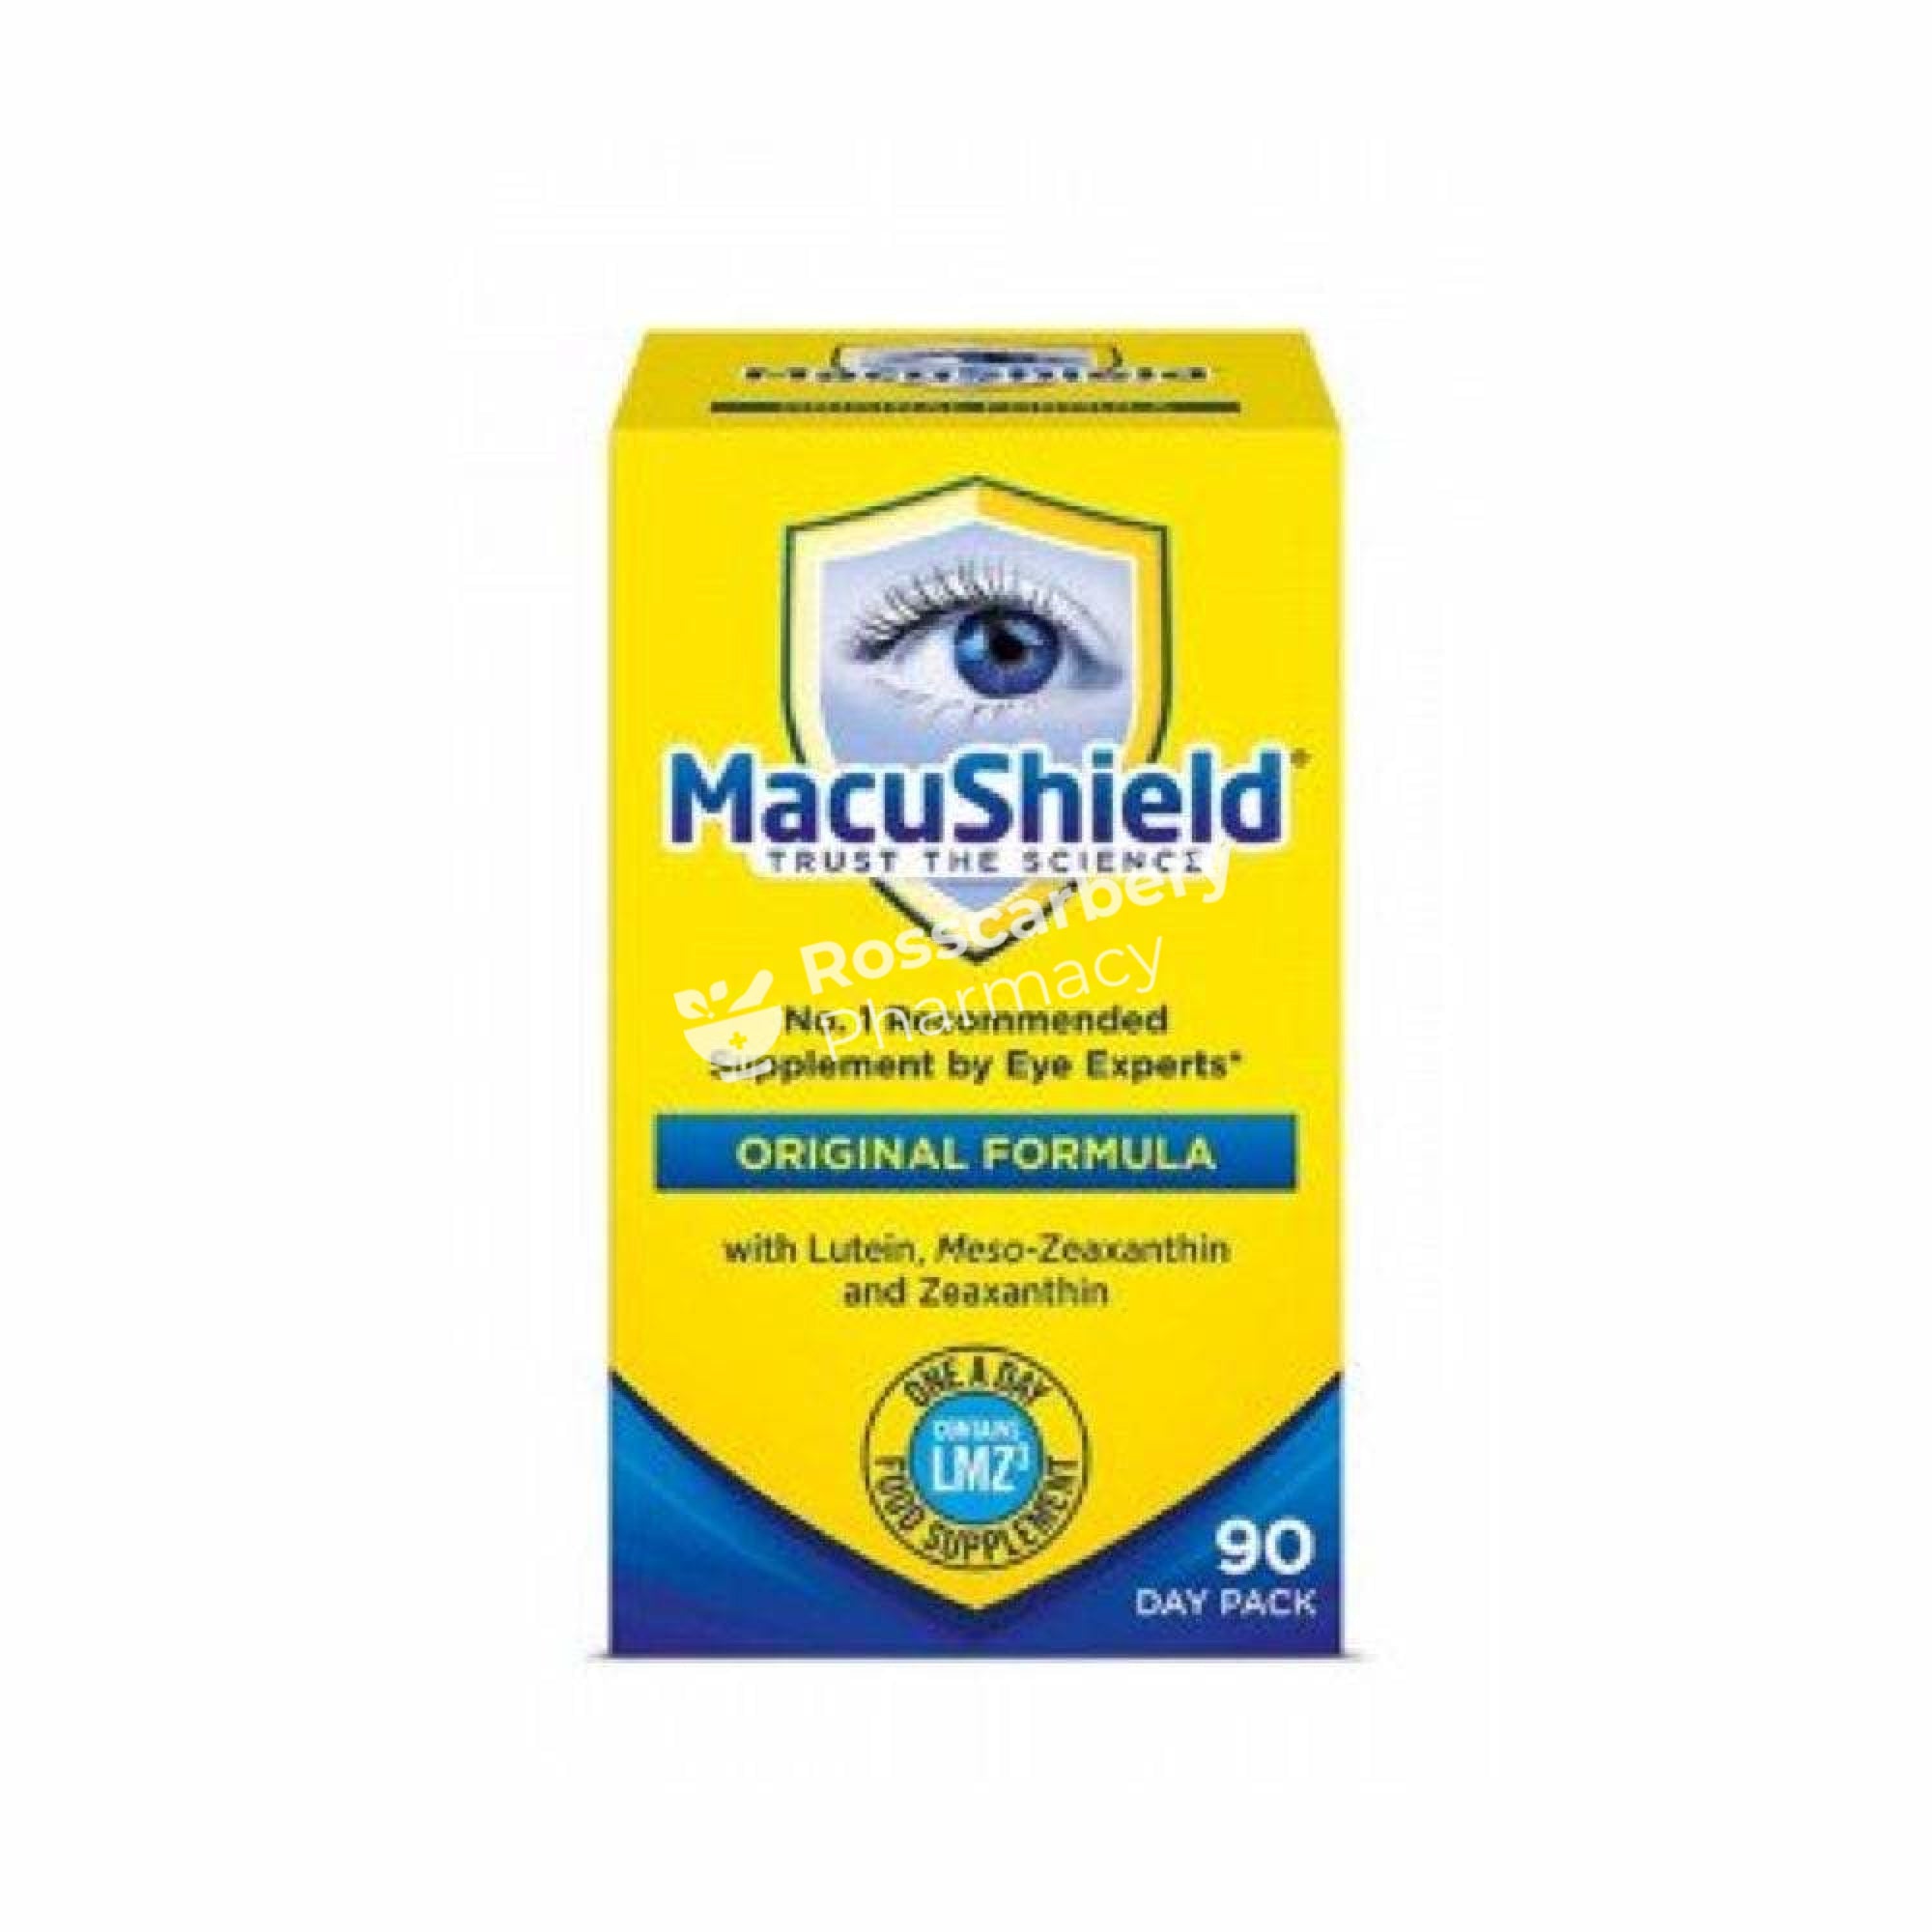 Macushield Original Formula Eye Supplement Macular Degeneration & Glaucoma